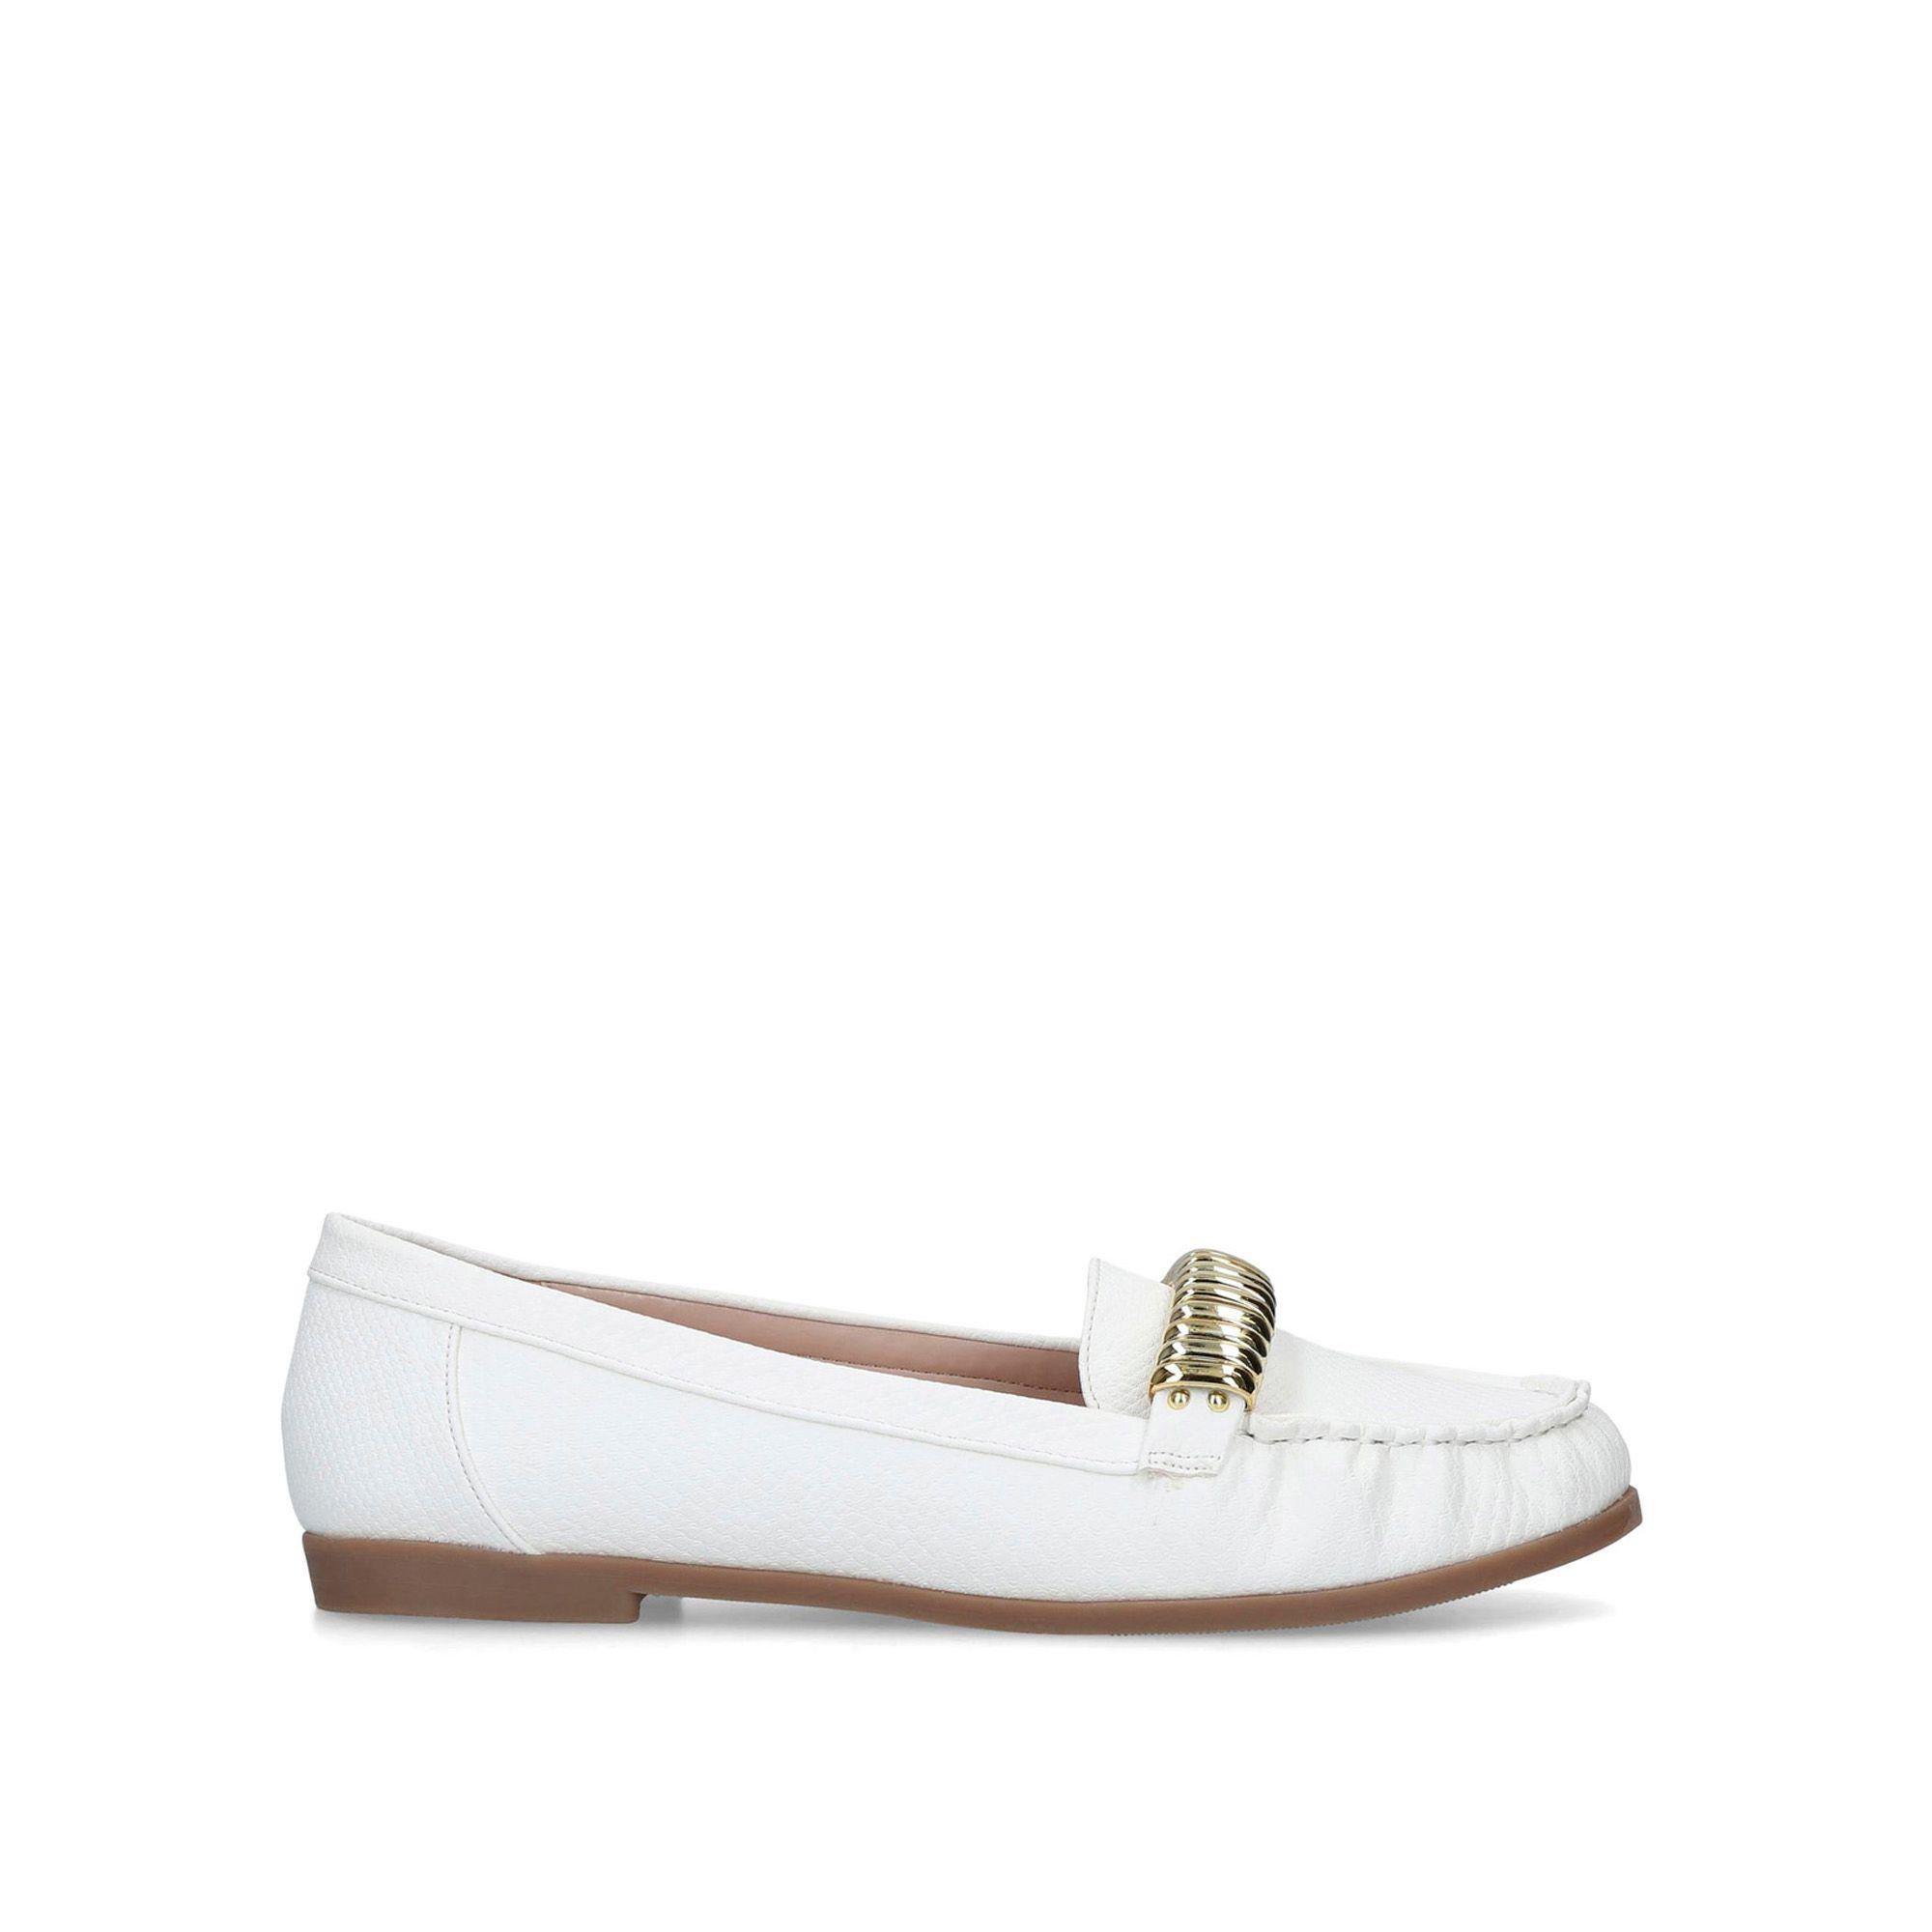 Carvela Kurt Geiger 'mockery' Embellished Loafers in White - Lyst